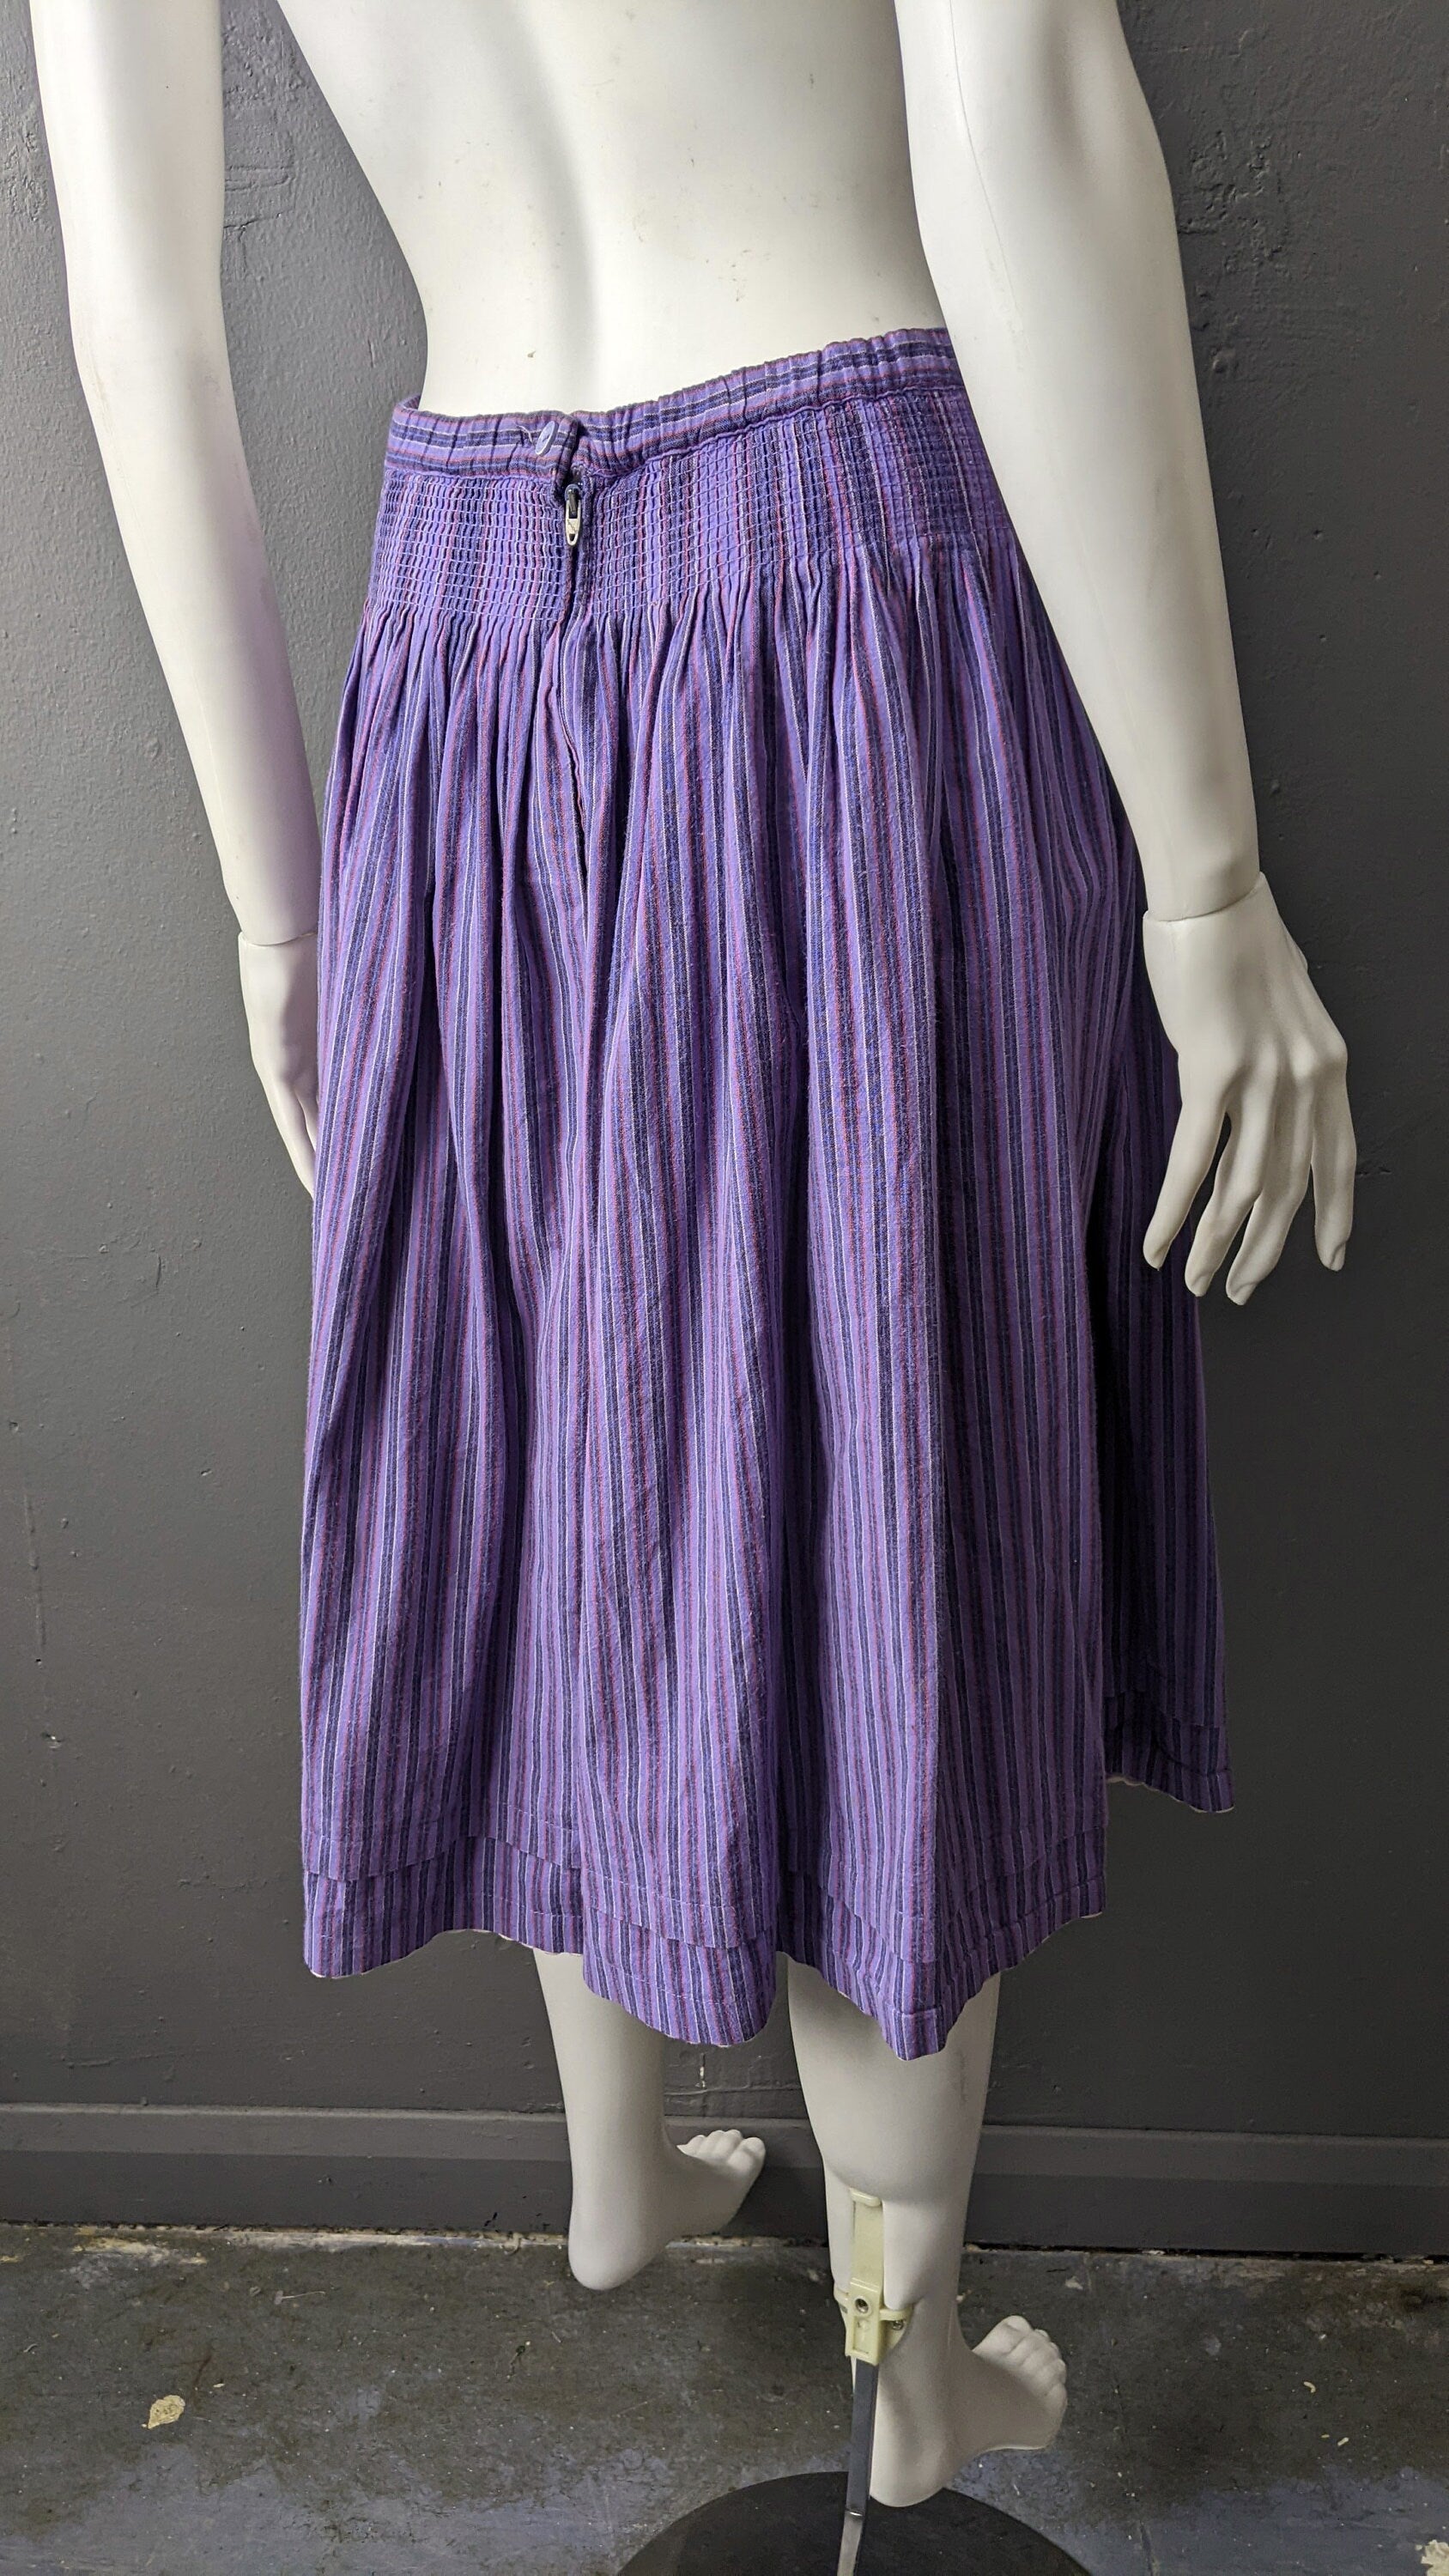 90s Striped Cotton Dirndl Skirt by Sigikid, Smocked Trachten Folk Style, Size Small